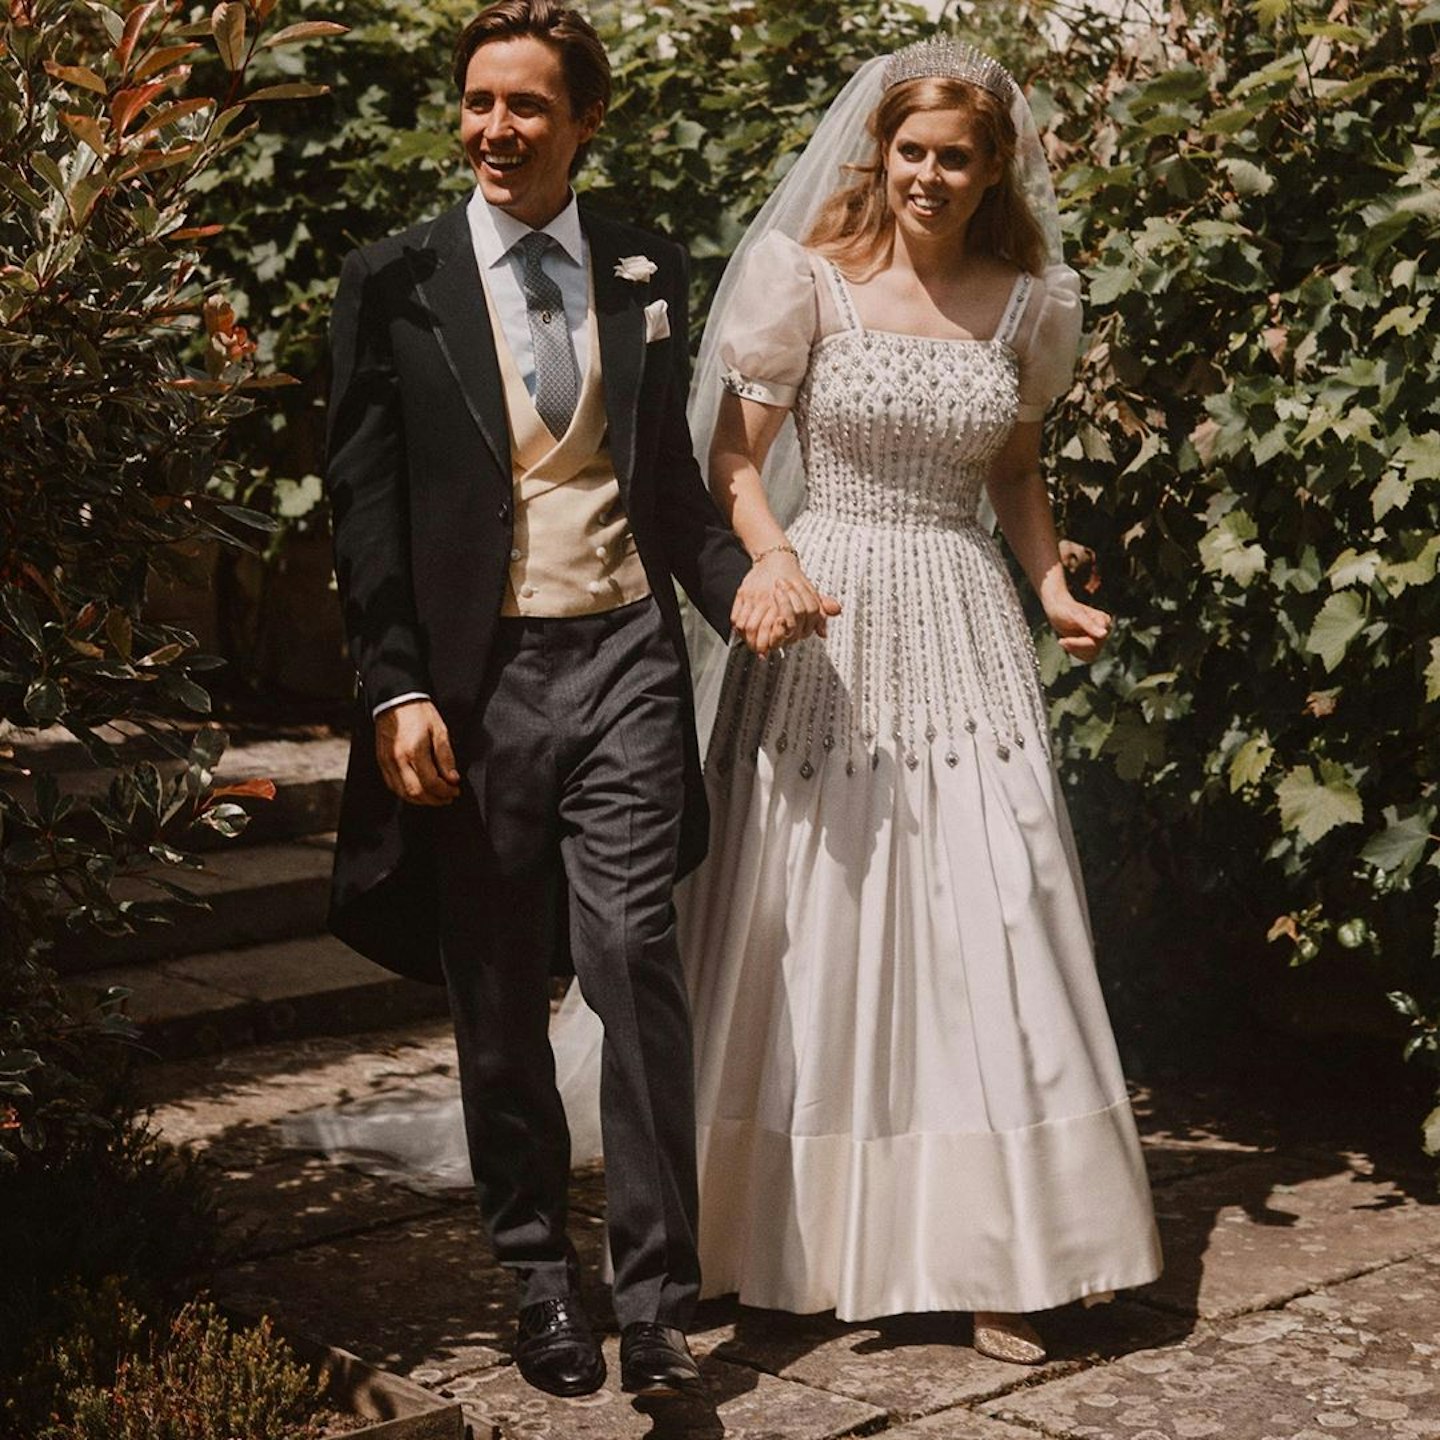 Photos from Princess Beatrice and Edoardo Mapelli Mozzi's wedding